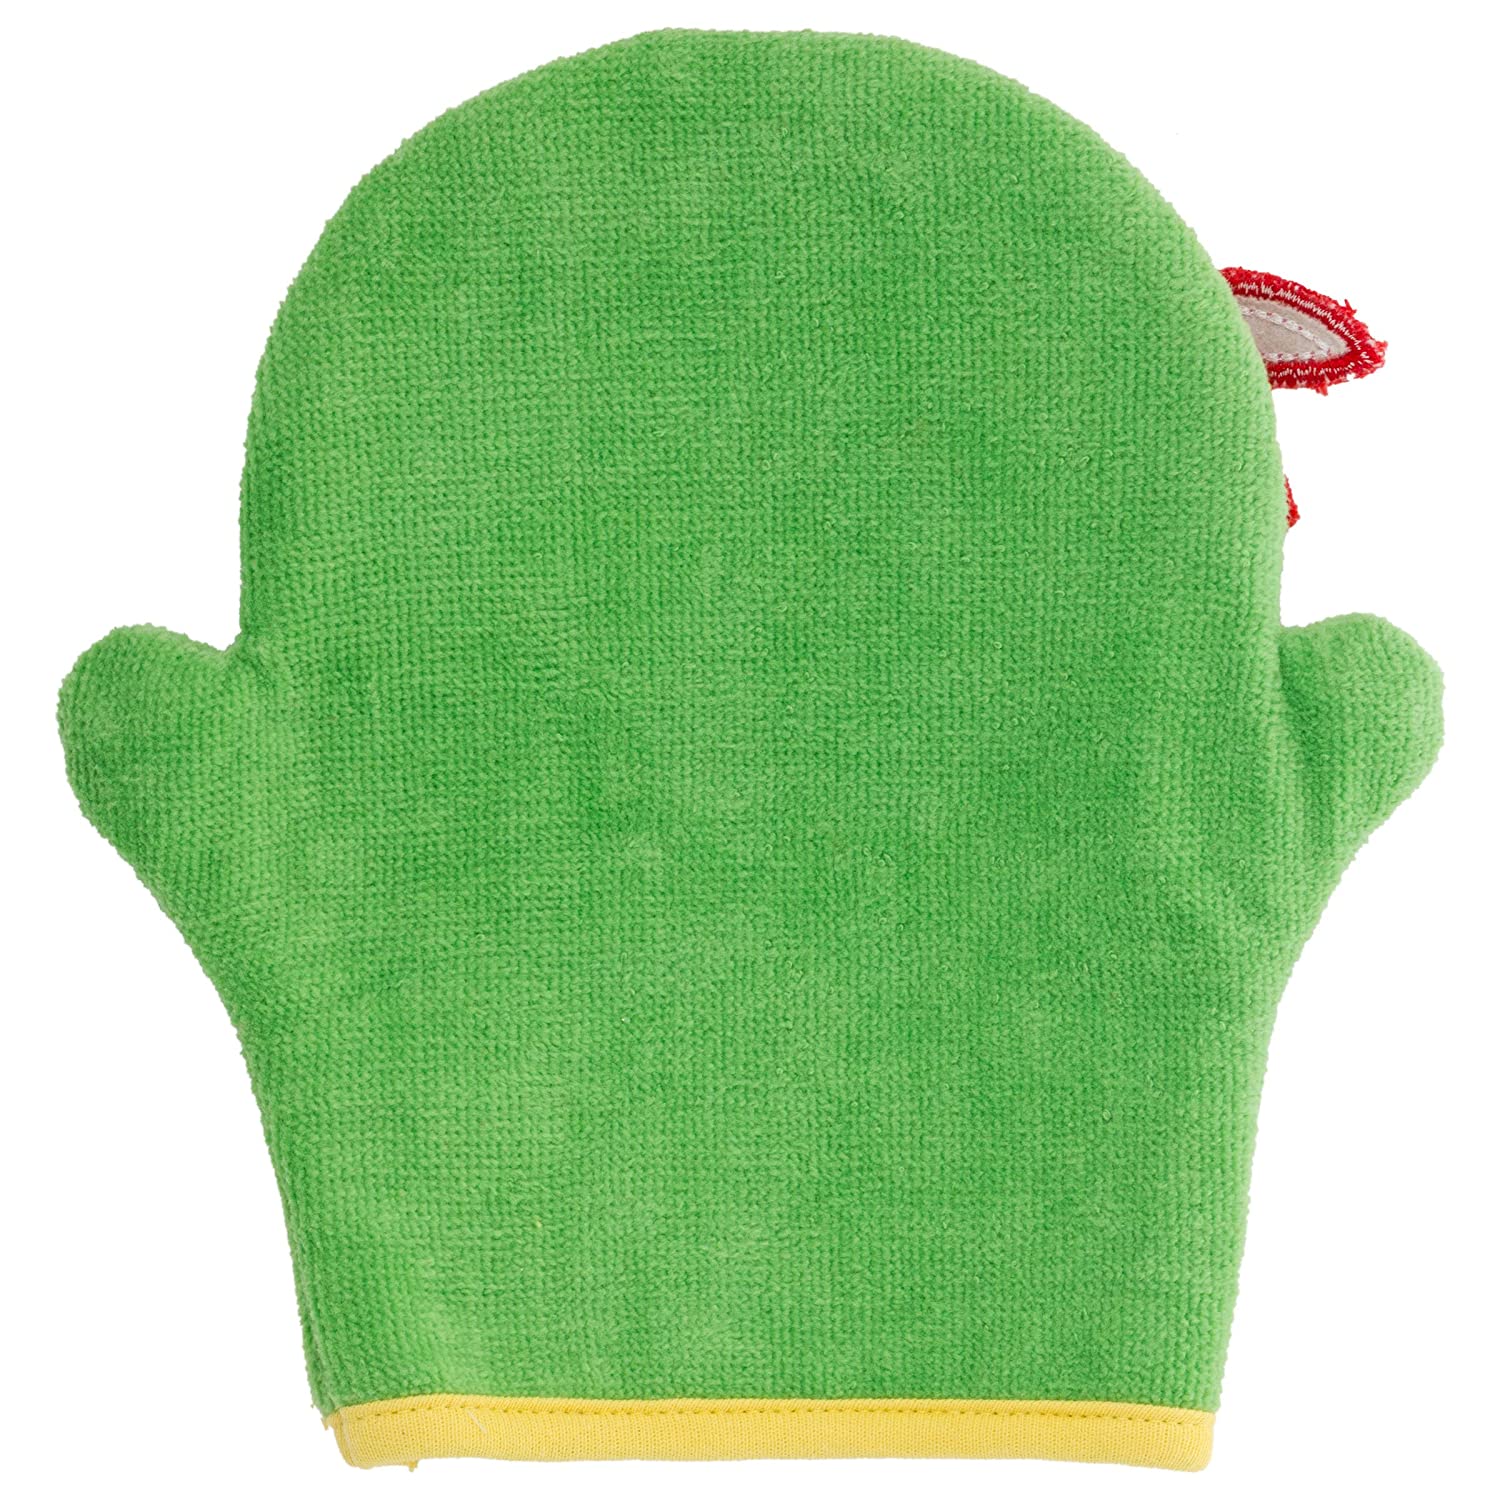 Bath towel baby animal customized soft cotton hand puppet towel glove